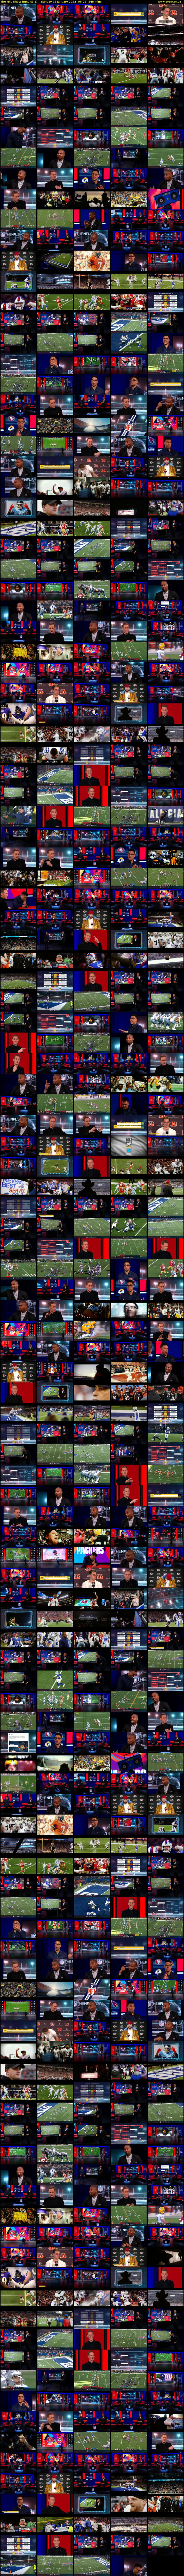 The NFL Show (BBC RB 1) Sunday 23 January 2022 06:28 - 12:16